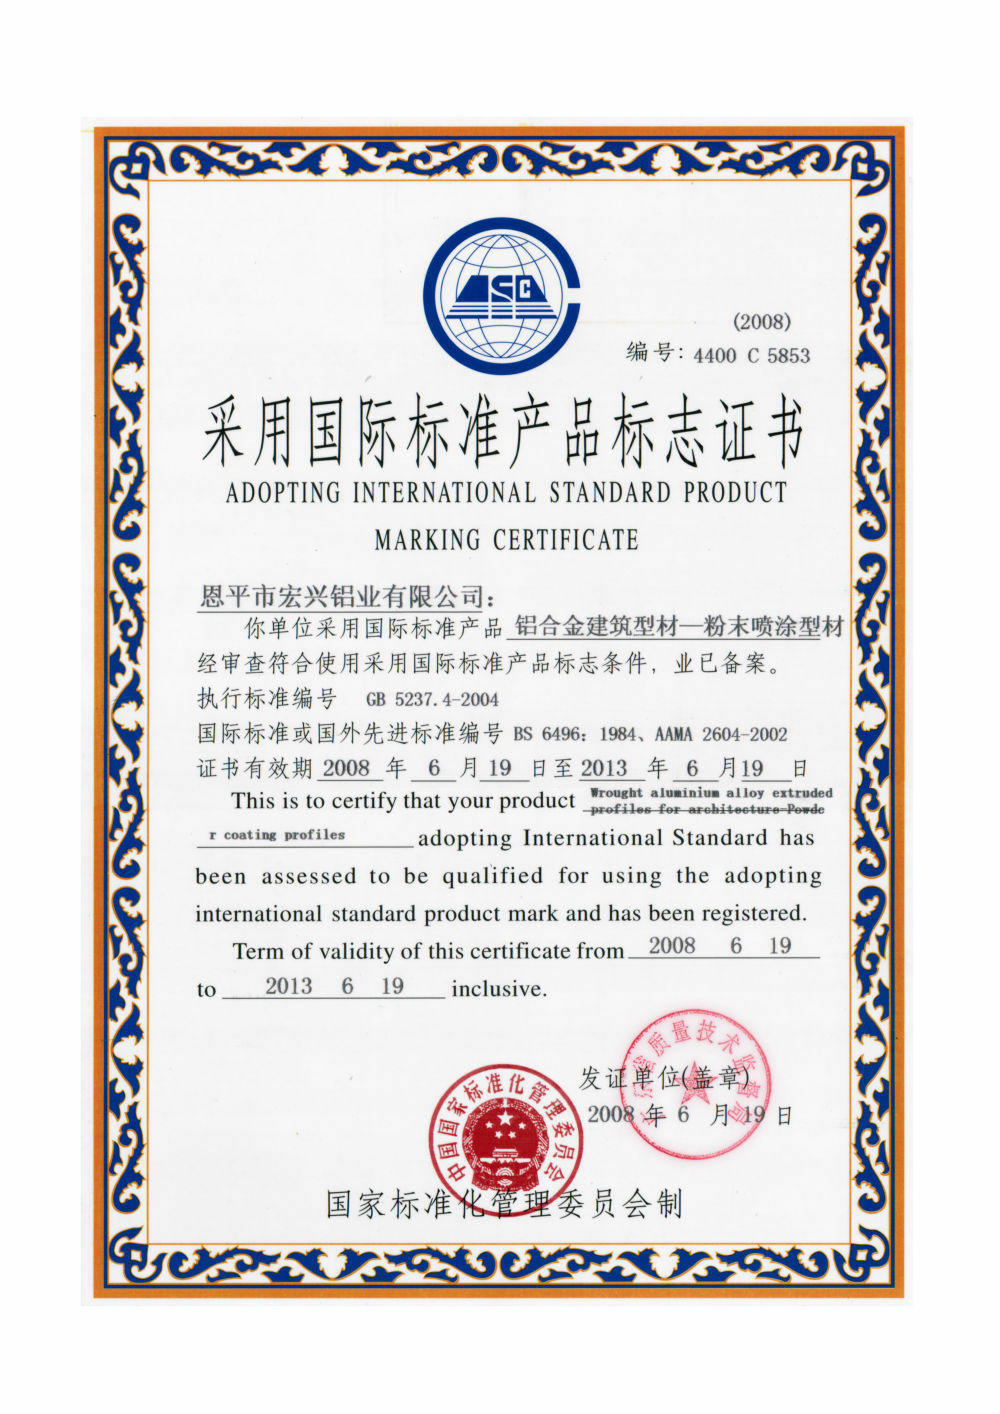 Adopting international standard product certificate